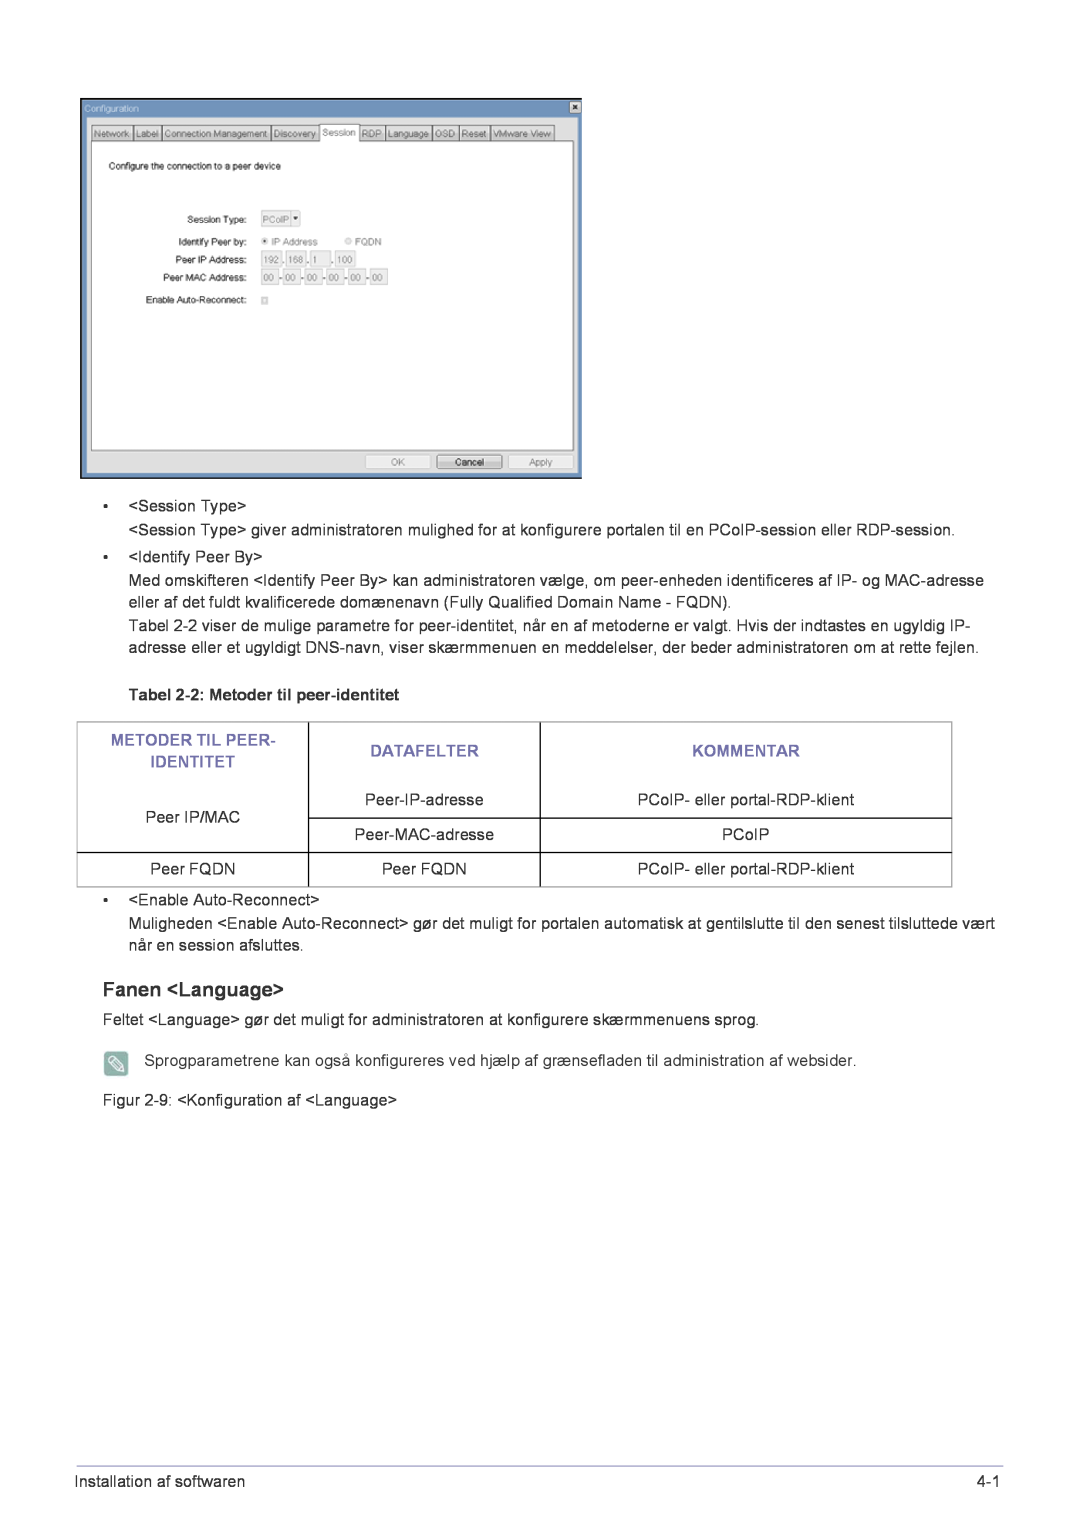 Samsung LF22NPBHBNP/EN manual Fanen Language, Metoder Til Peer, Datafelter, Kommentar, Identitet 